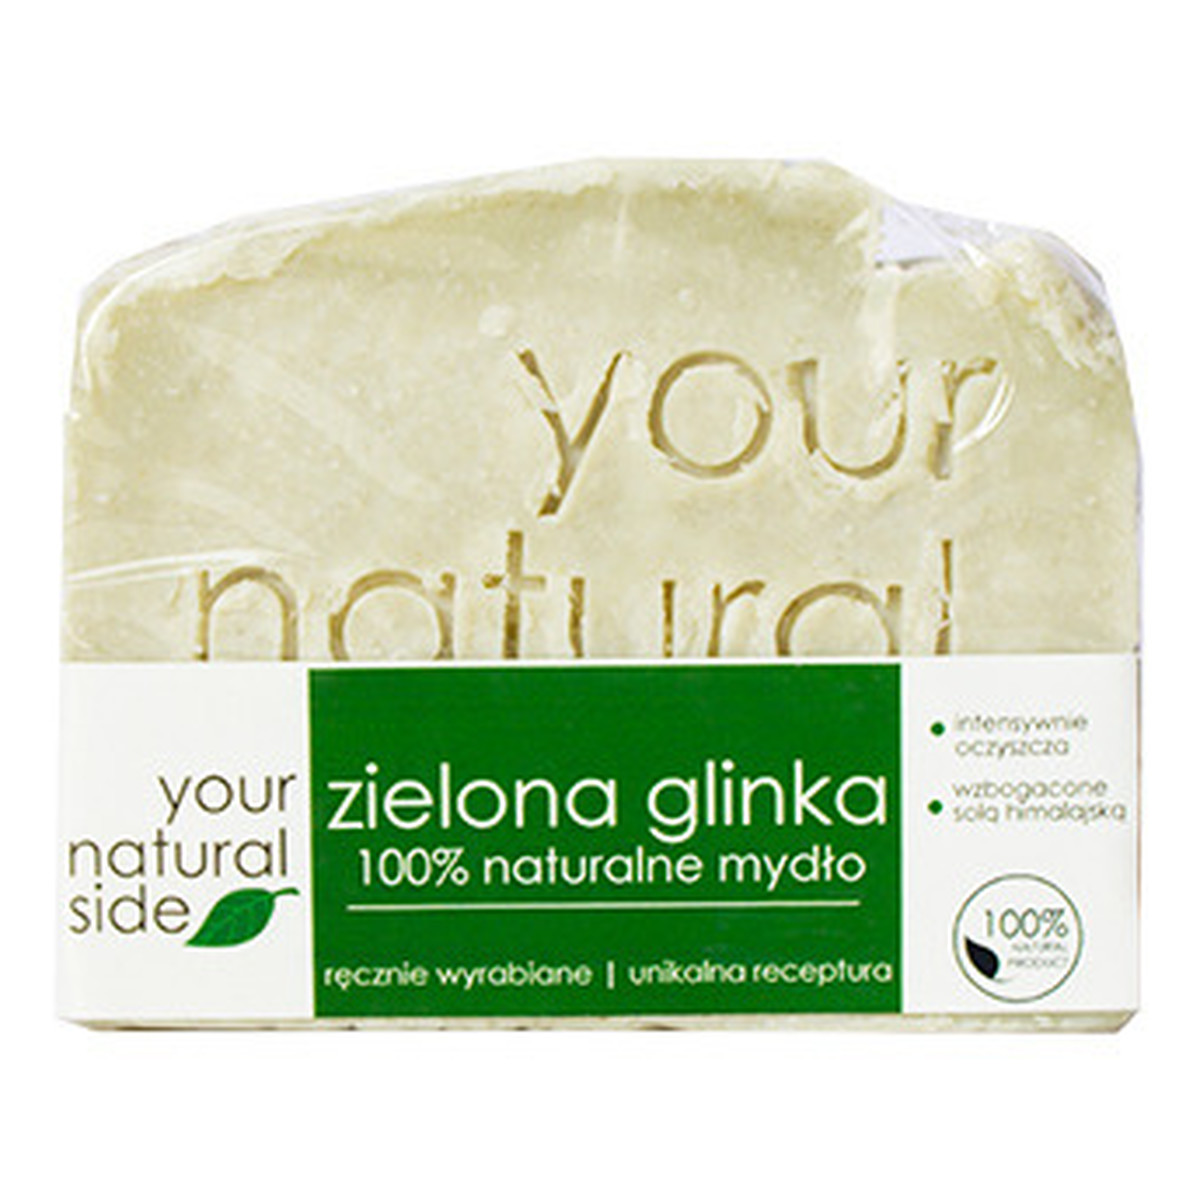 Your Natural Side Naturalne 100% Mydło Zielona Glinka 100g